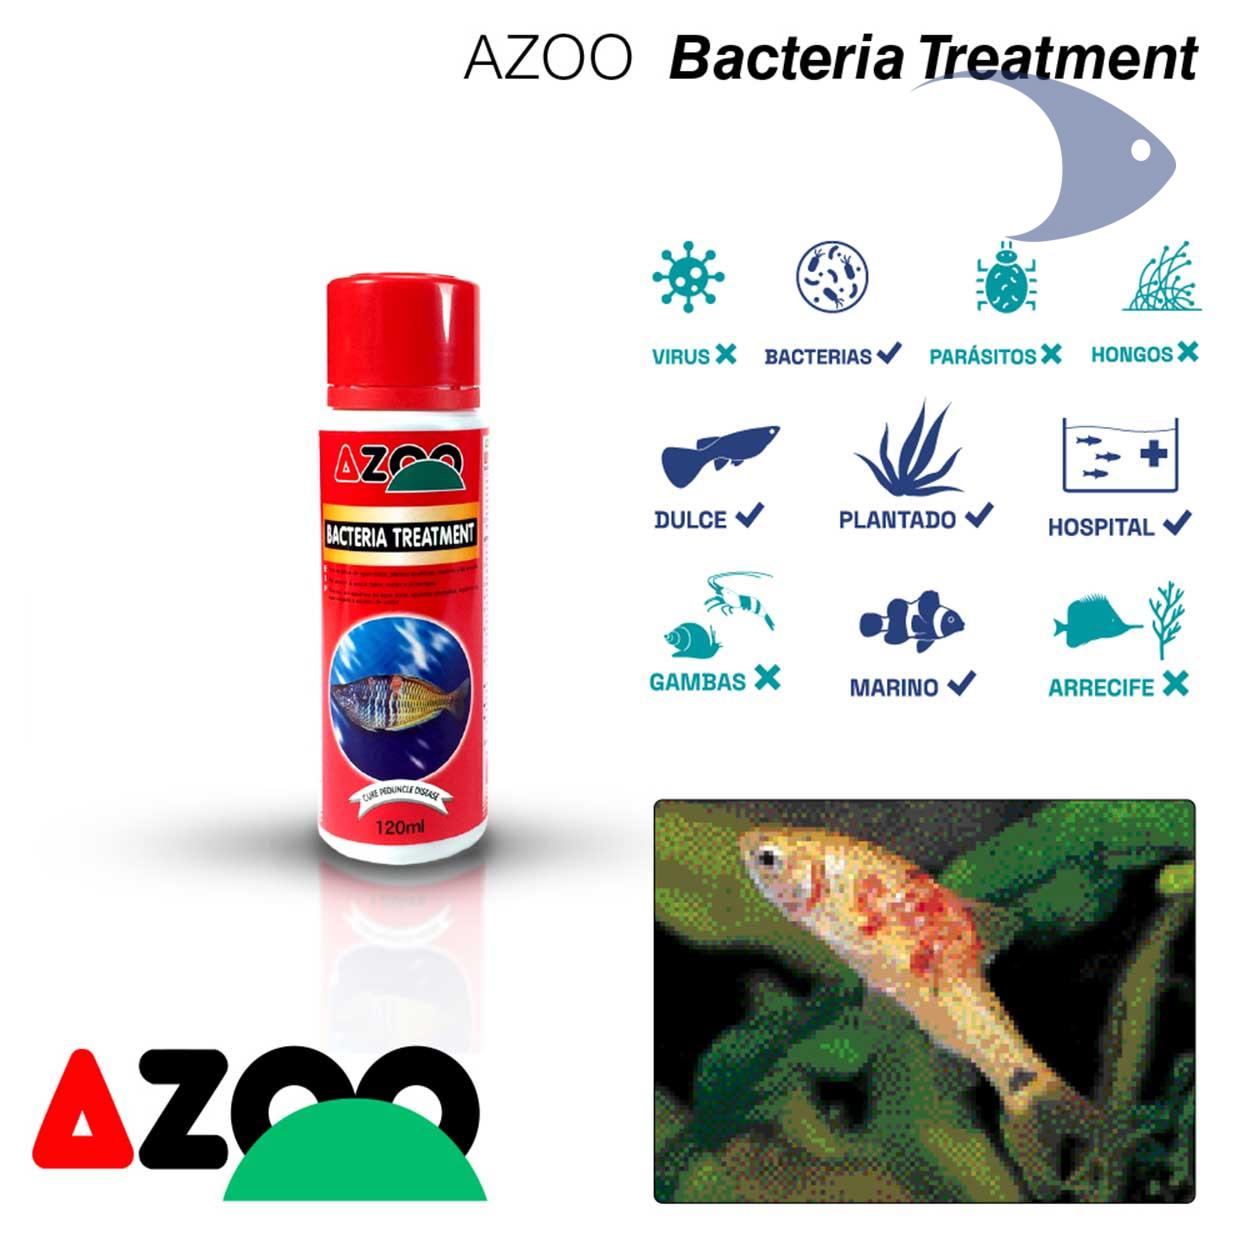 AZOO Bacteria Treatment, tratamiento nº1 contra bacterias